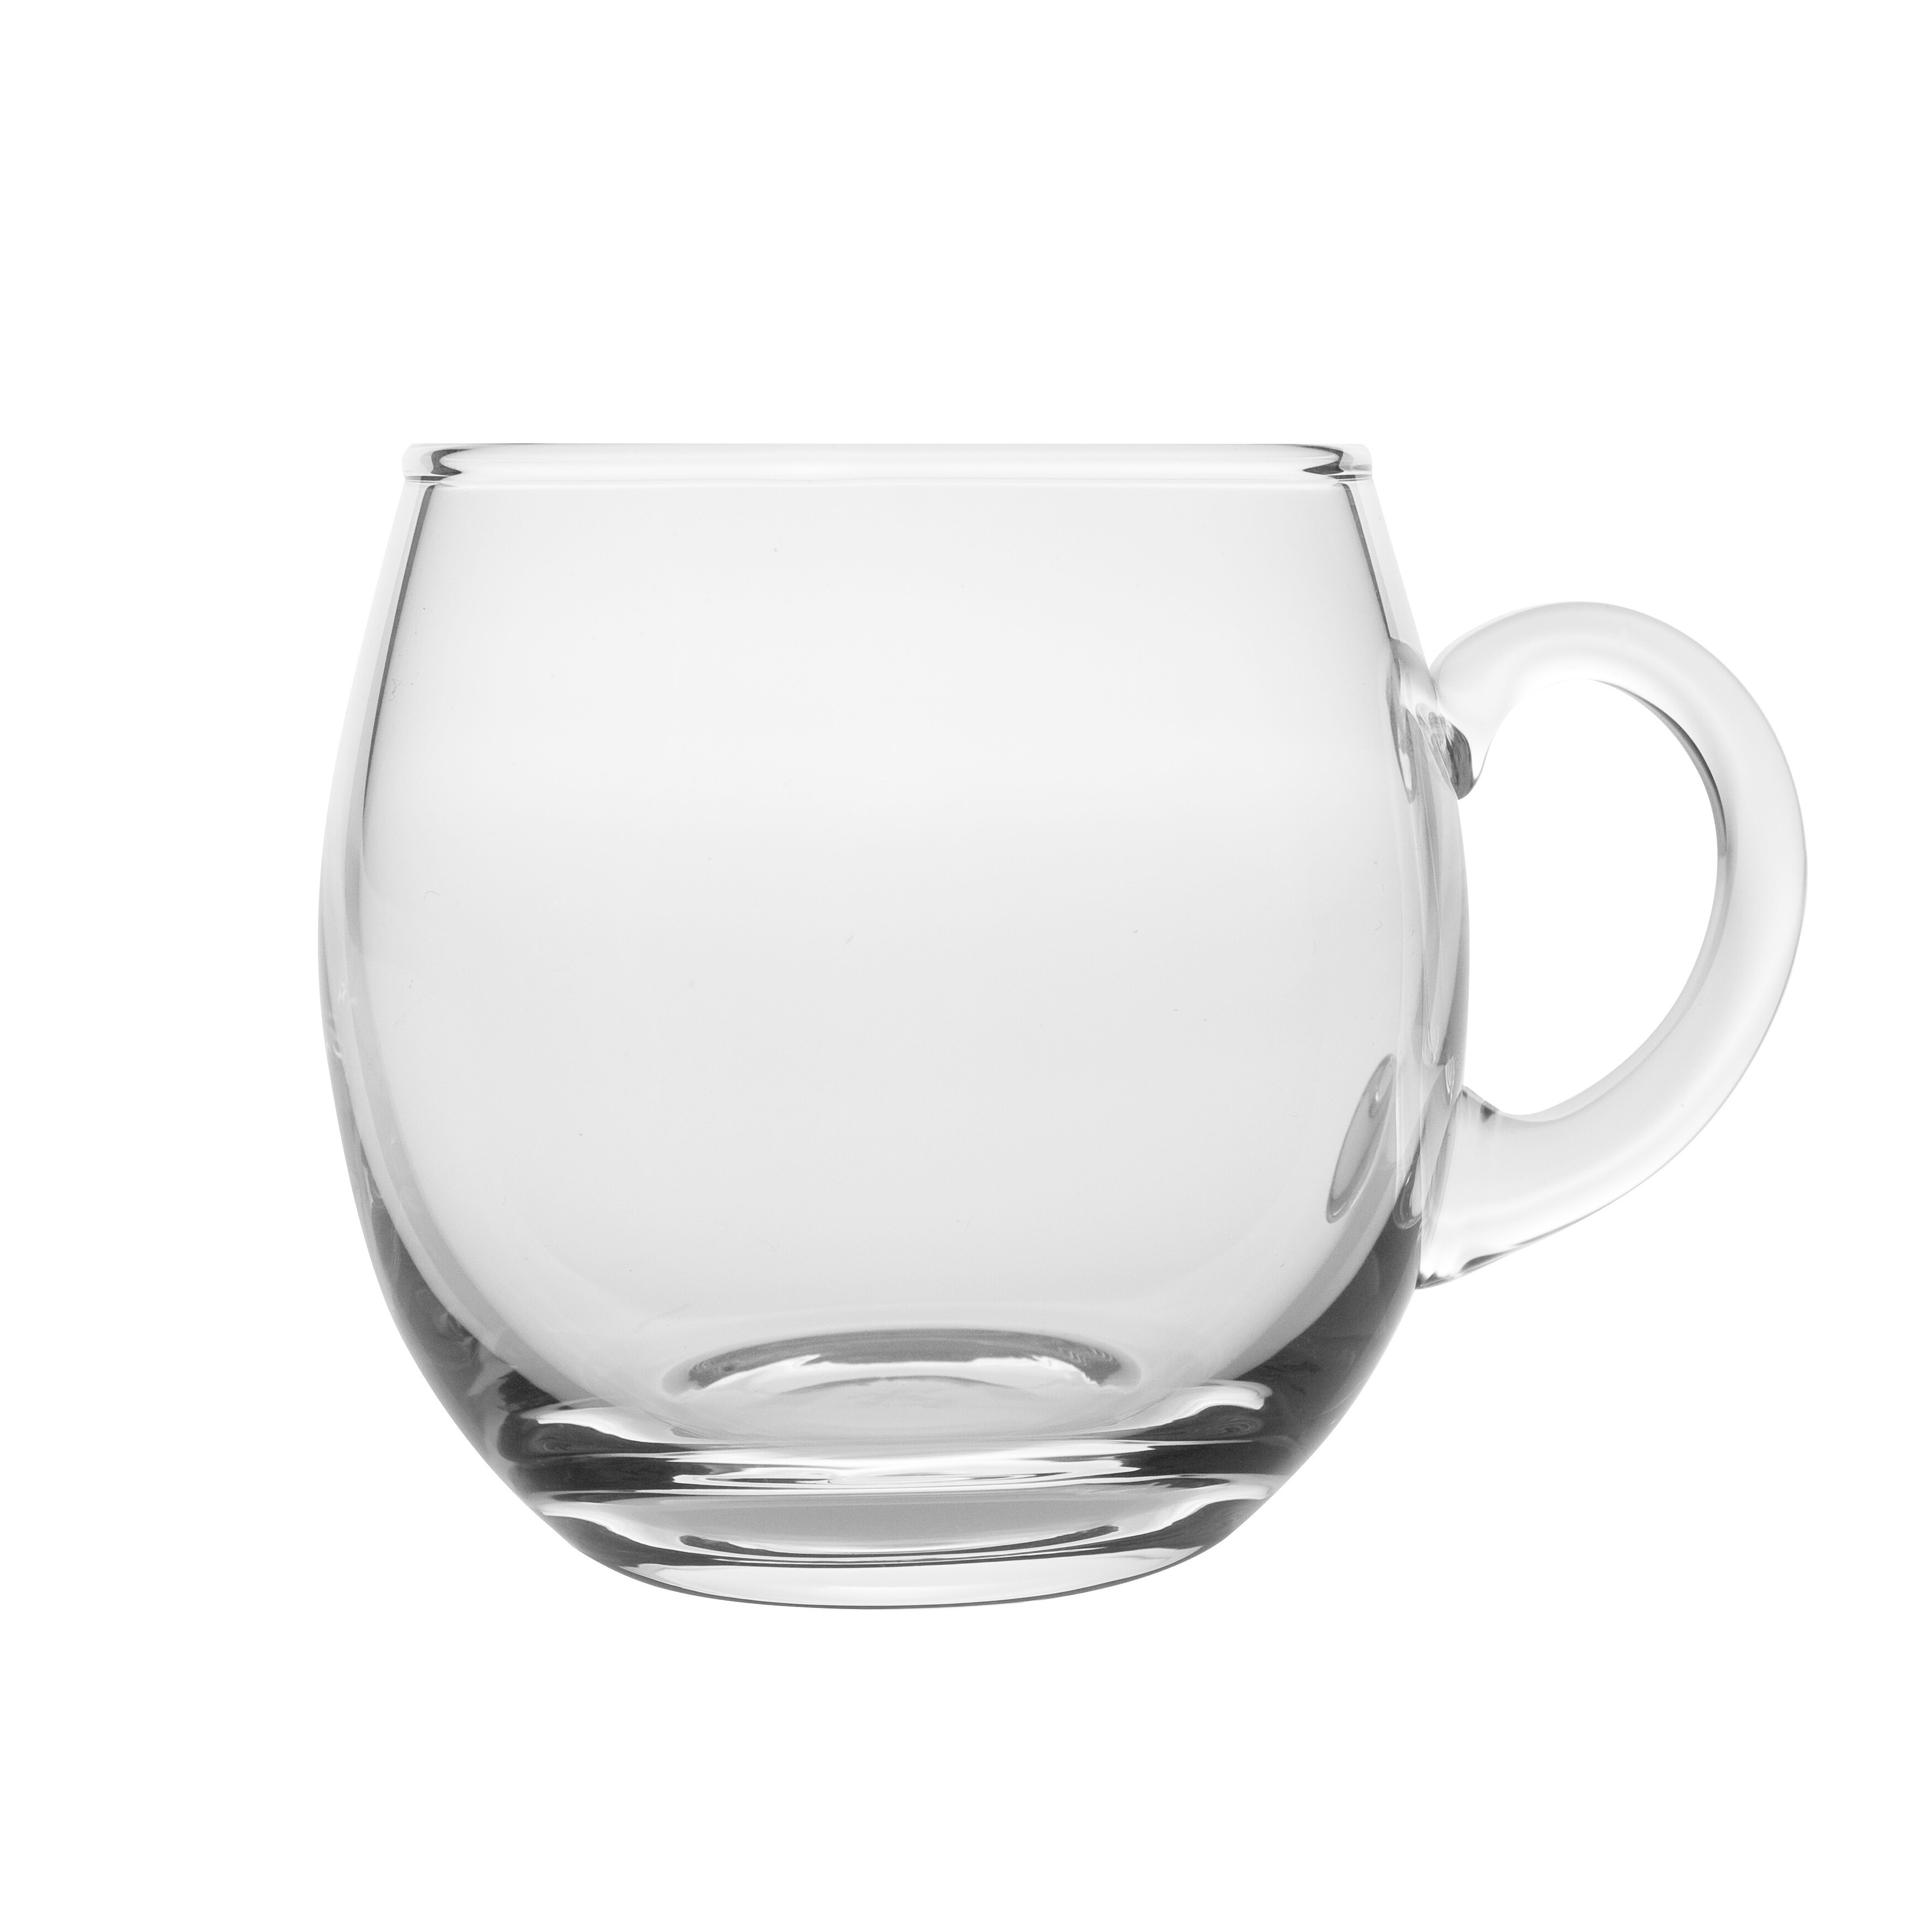 Majestic Gifts Inc. European 20 oz. Glass Mug with Handle